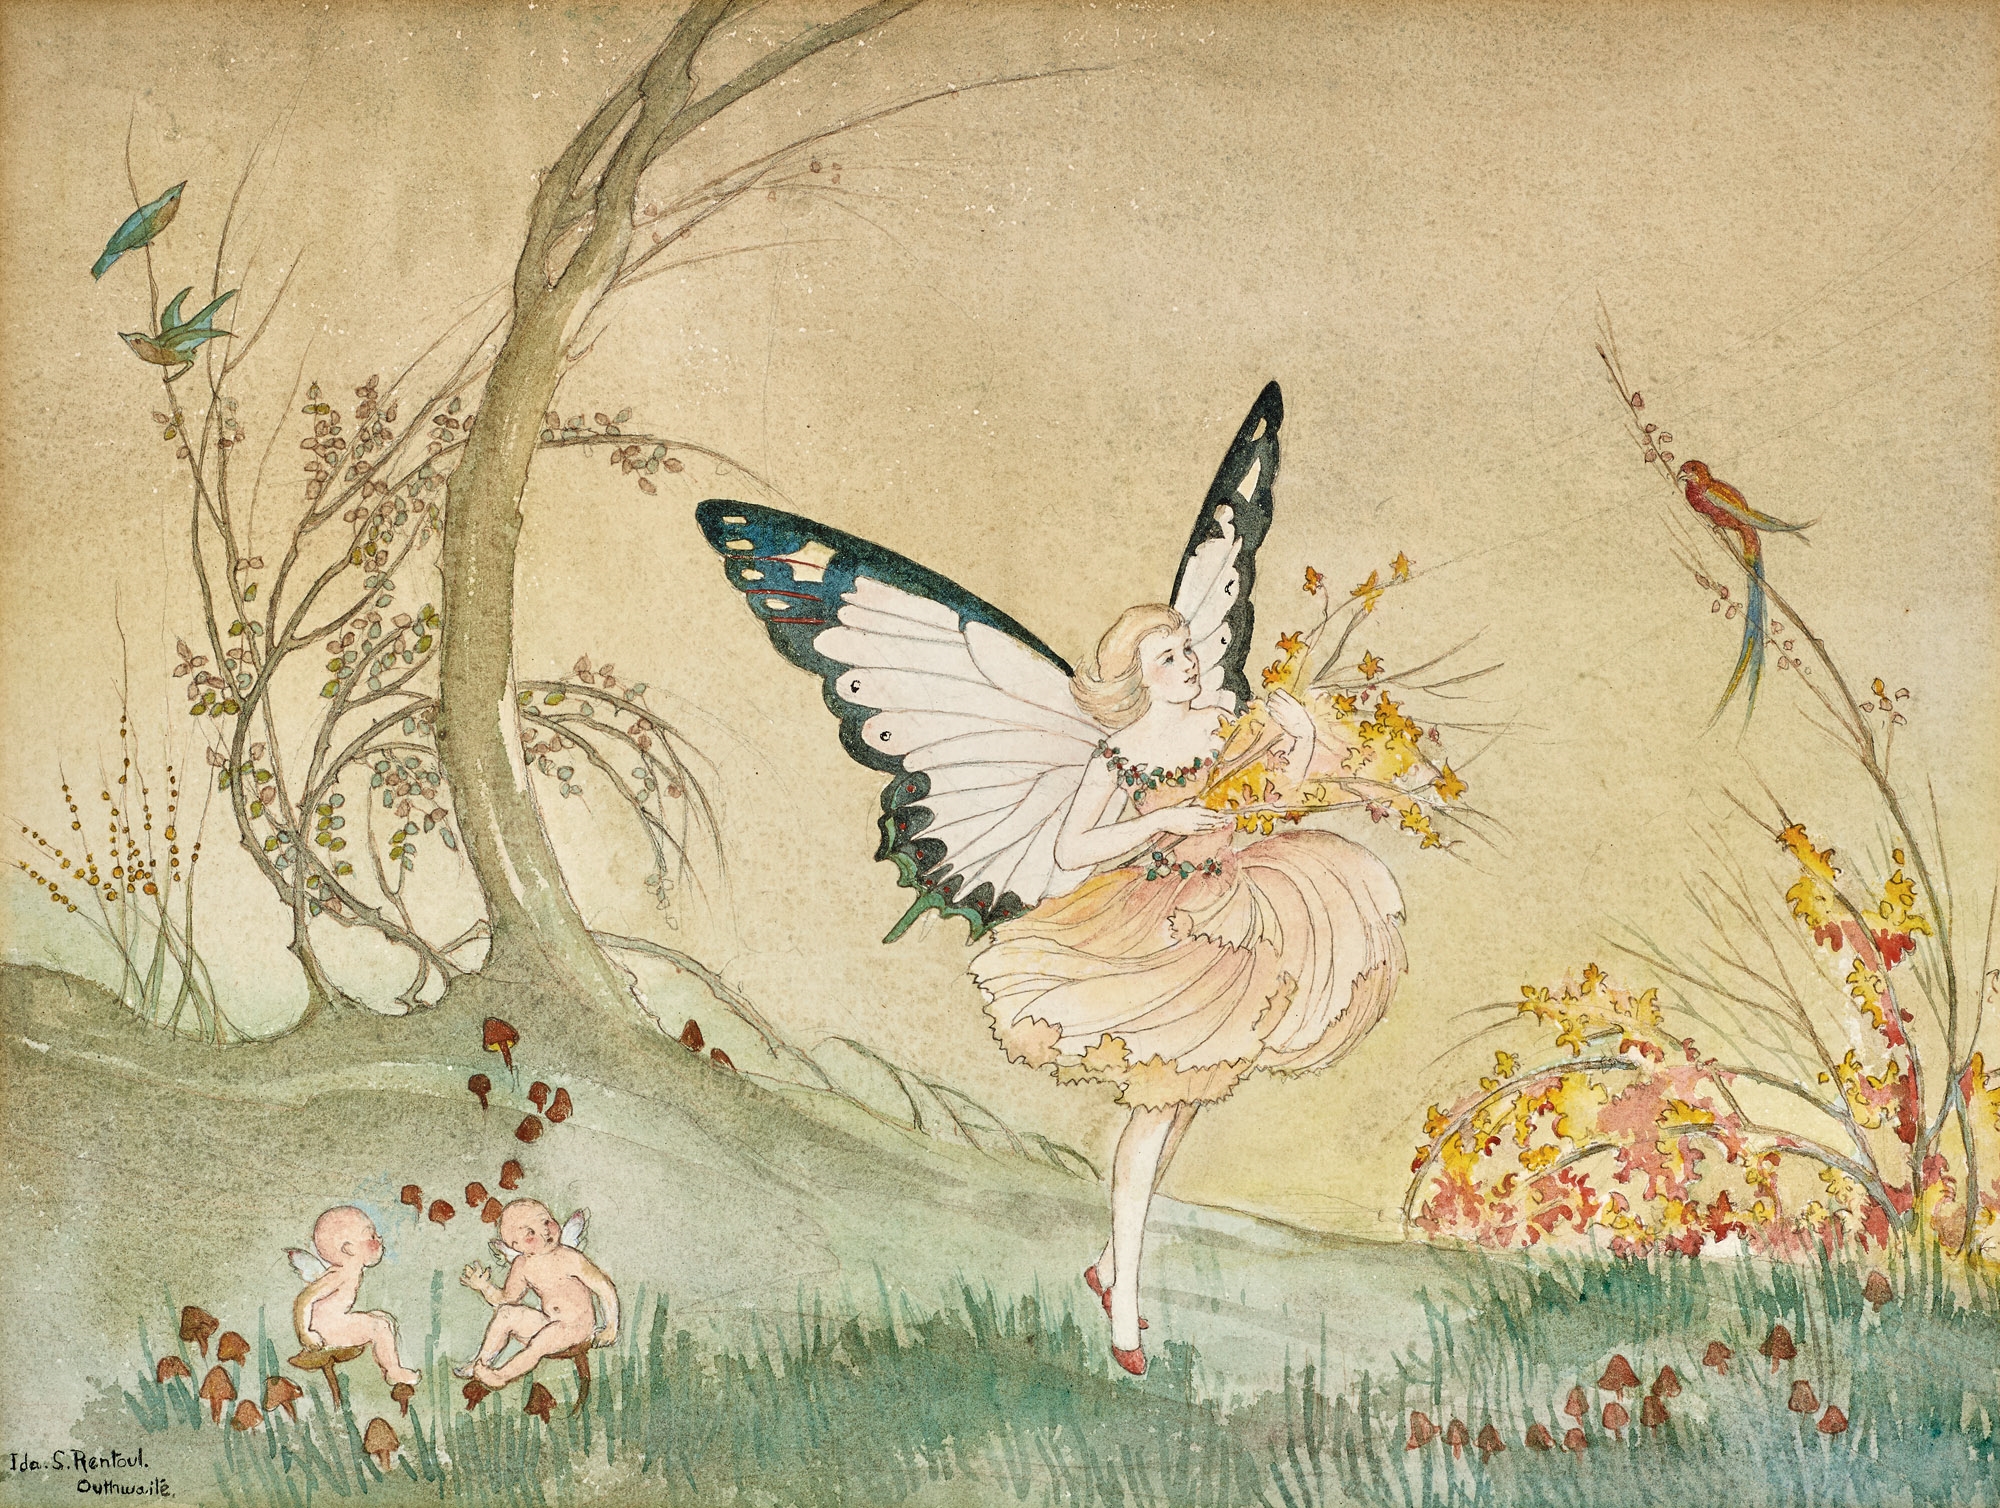 The Fairy Dance - Ida Rentoul Outhwaite